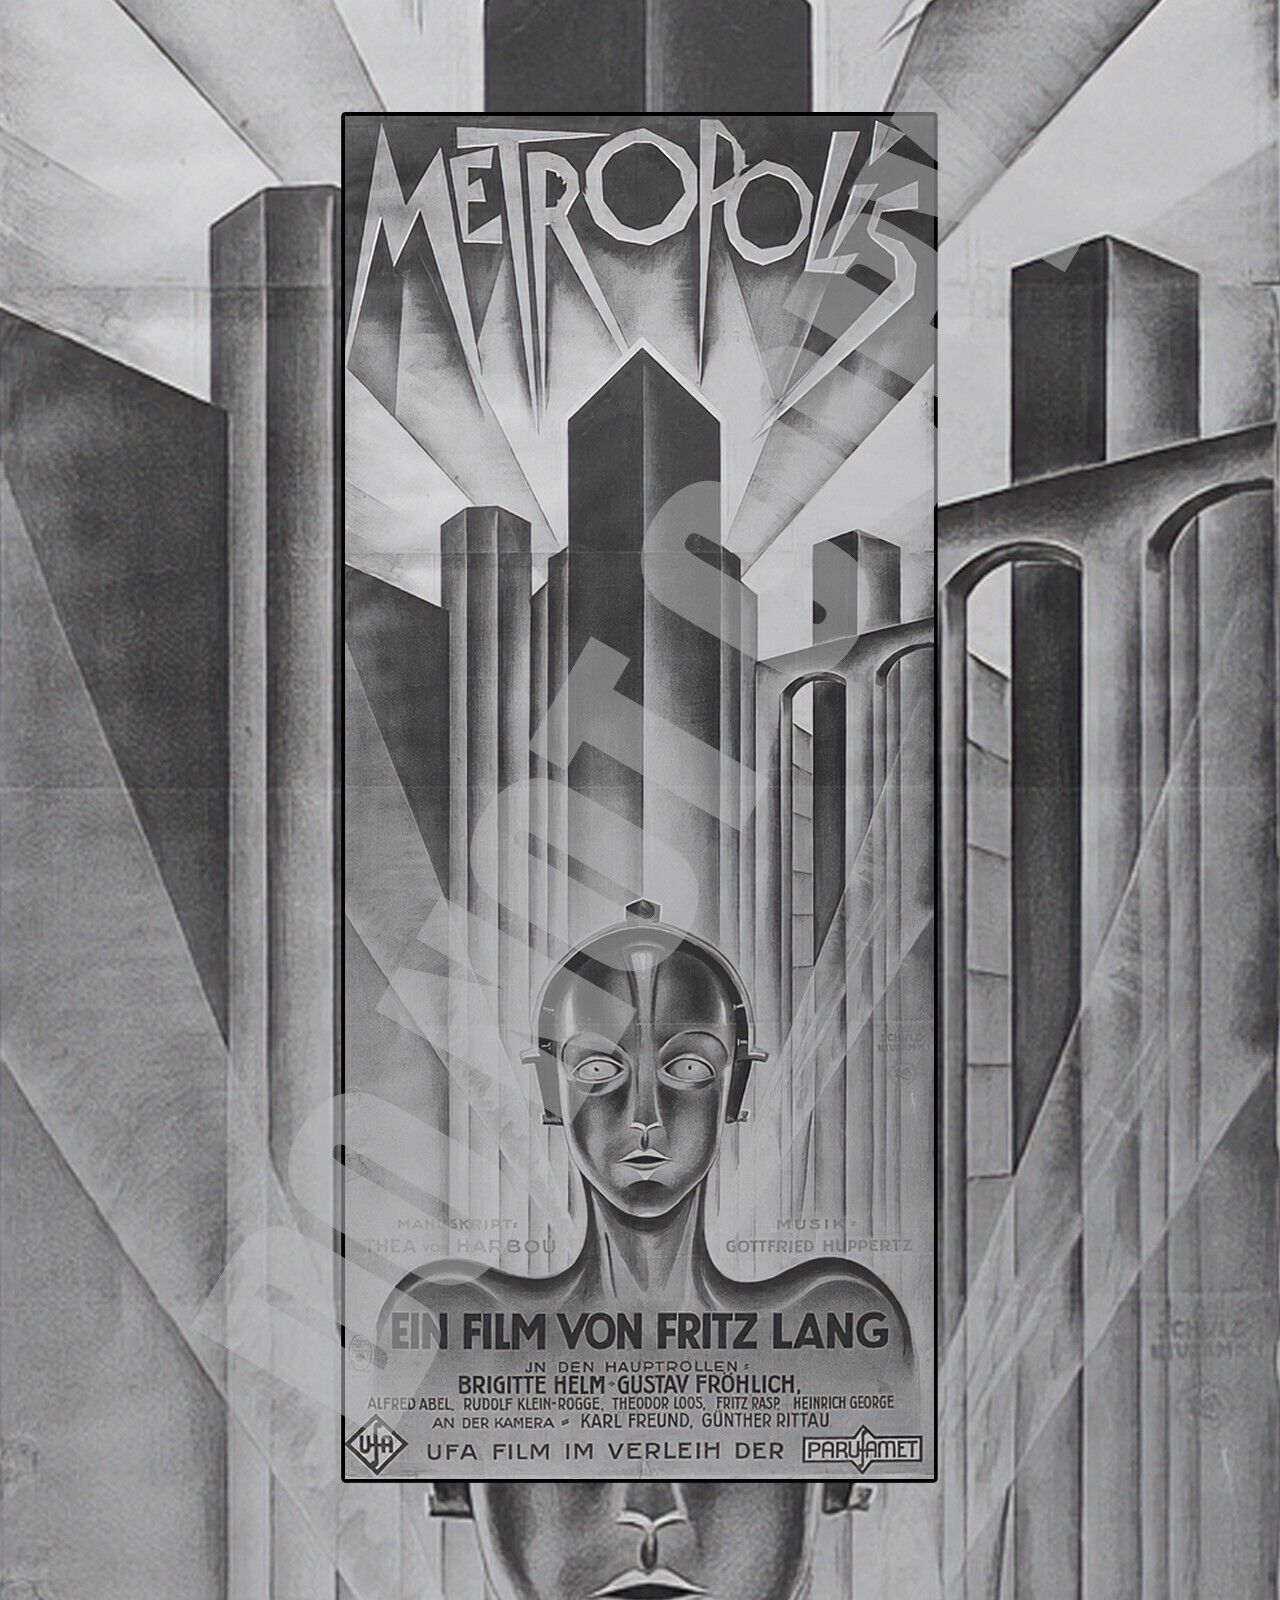 1927 Sci-Fi Metropolis Movie de Fritz Lang Poster Collage Art - B - 8x10 Photo